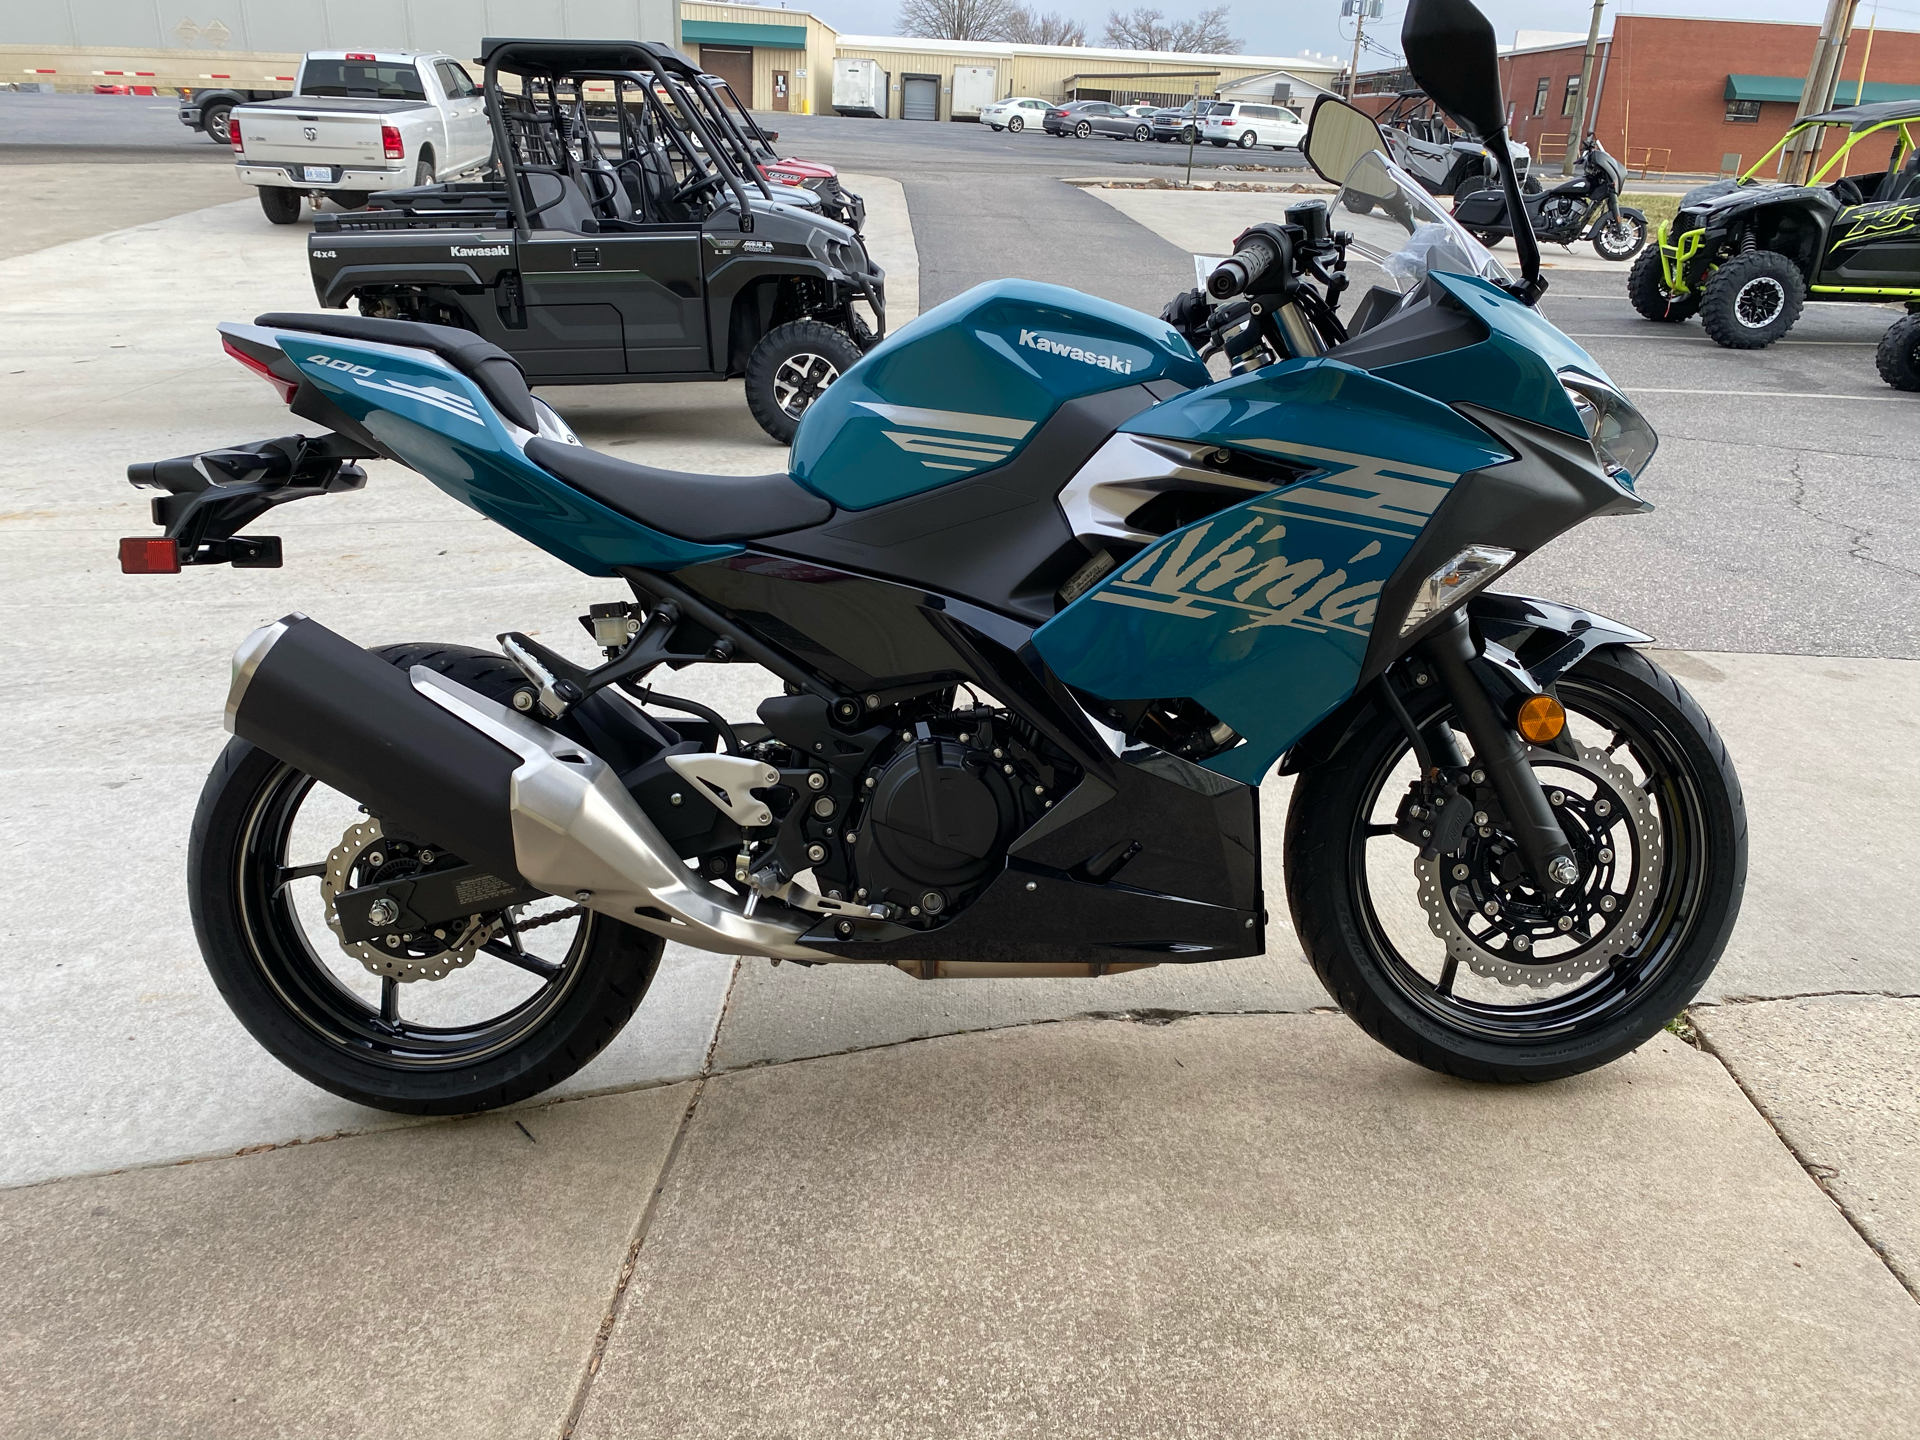 New 2021 Kawasaki Ninja 400 Motorcycles in NC | Stock - greatwesternmotorcycles.com